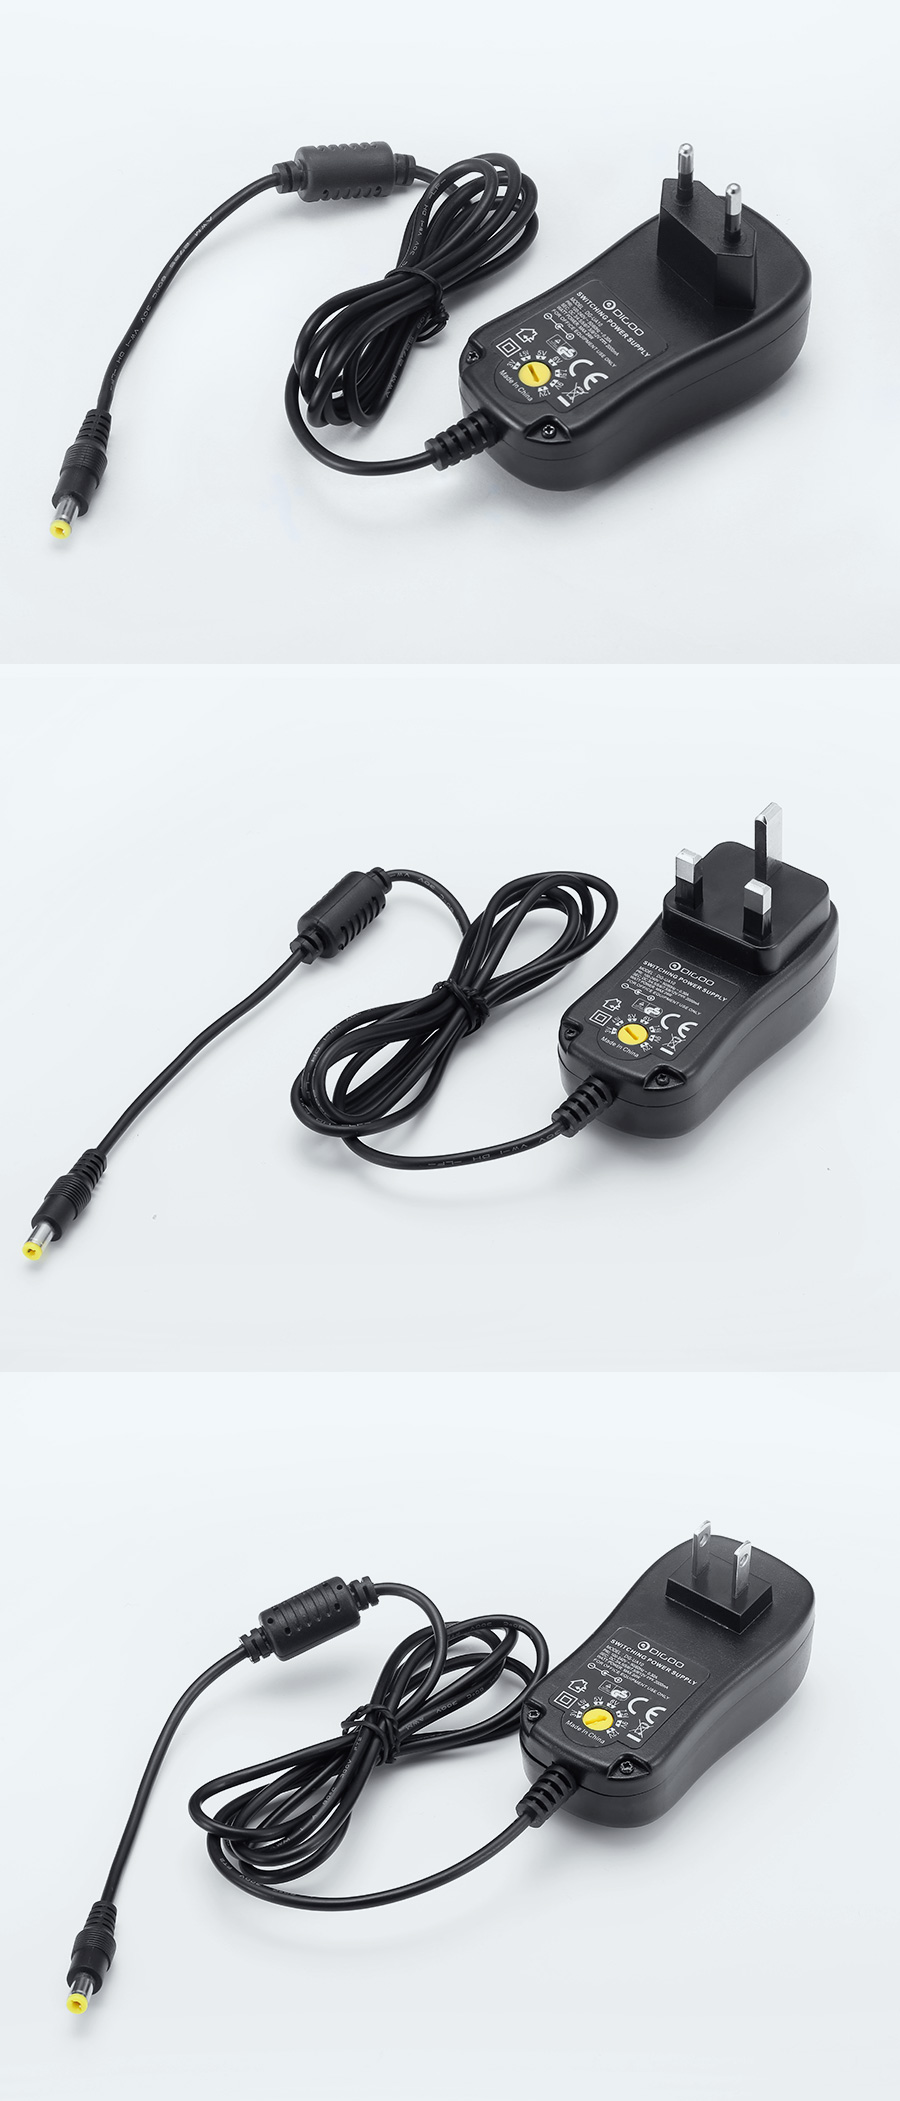 Digoo-DG-UA10-3-12V-Universal-10-Selectable-Charger-Adapter-Multi-Voltage-Switching-Micro-USB-Plug-P-1162451